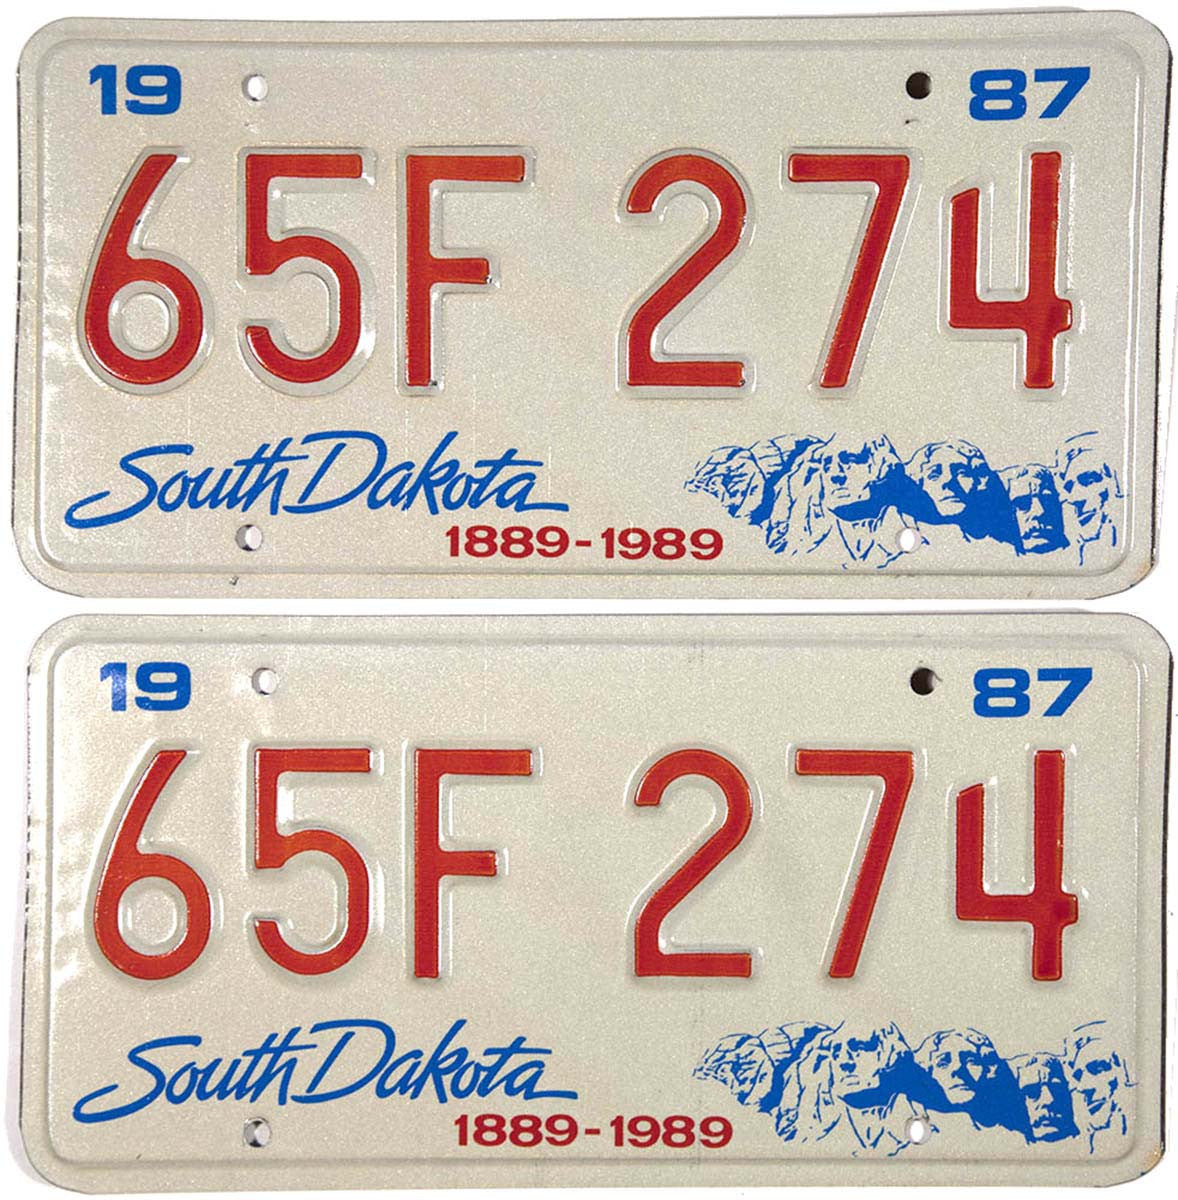 1987 South Dakota License Plates Brandywine General Store